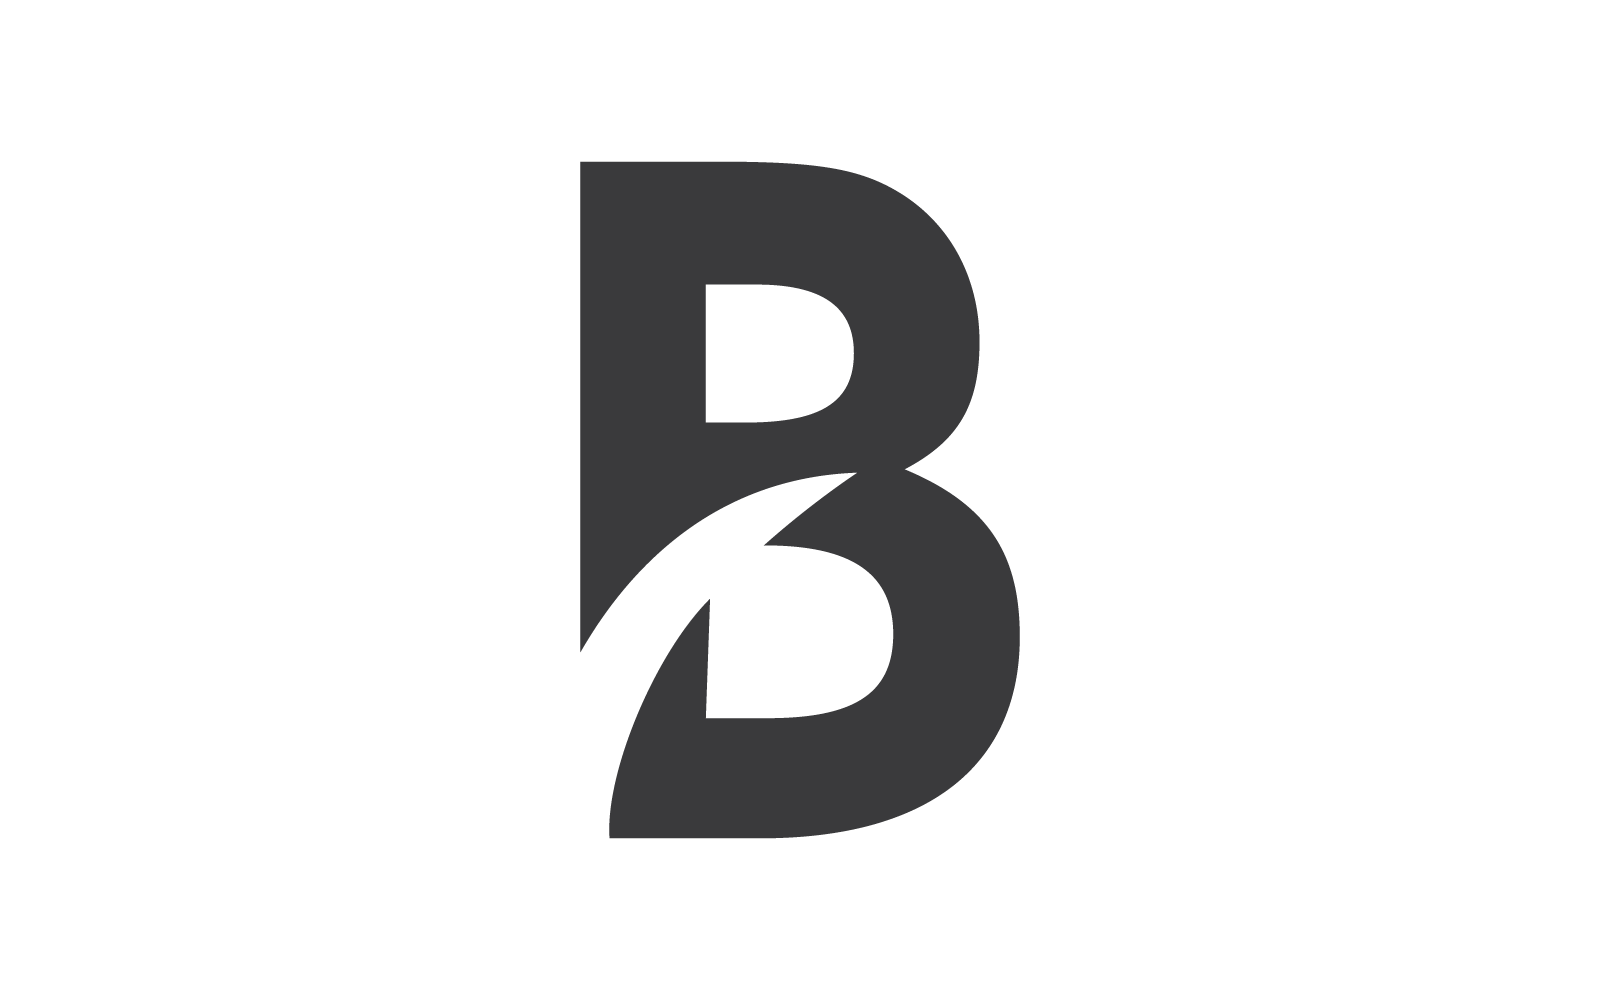 Modern B Initial, letter, alfabet font logo vector design